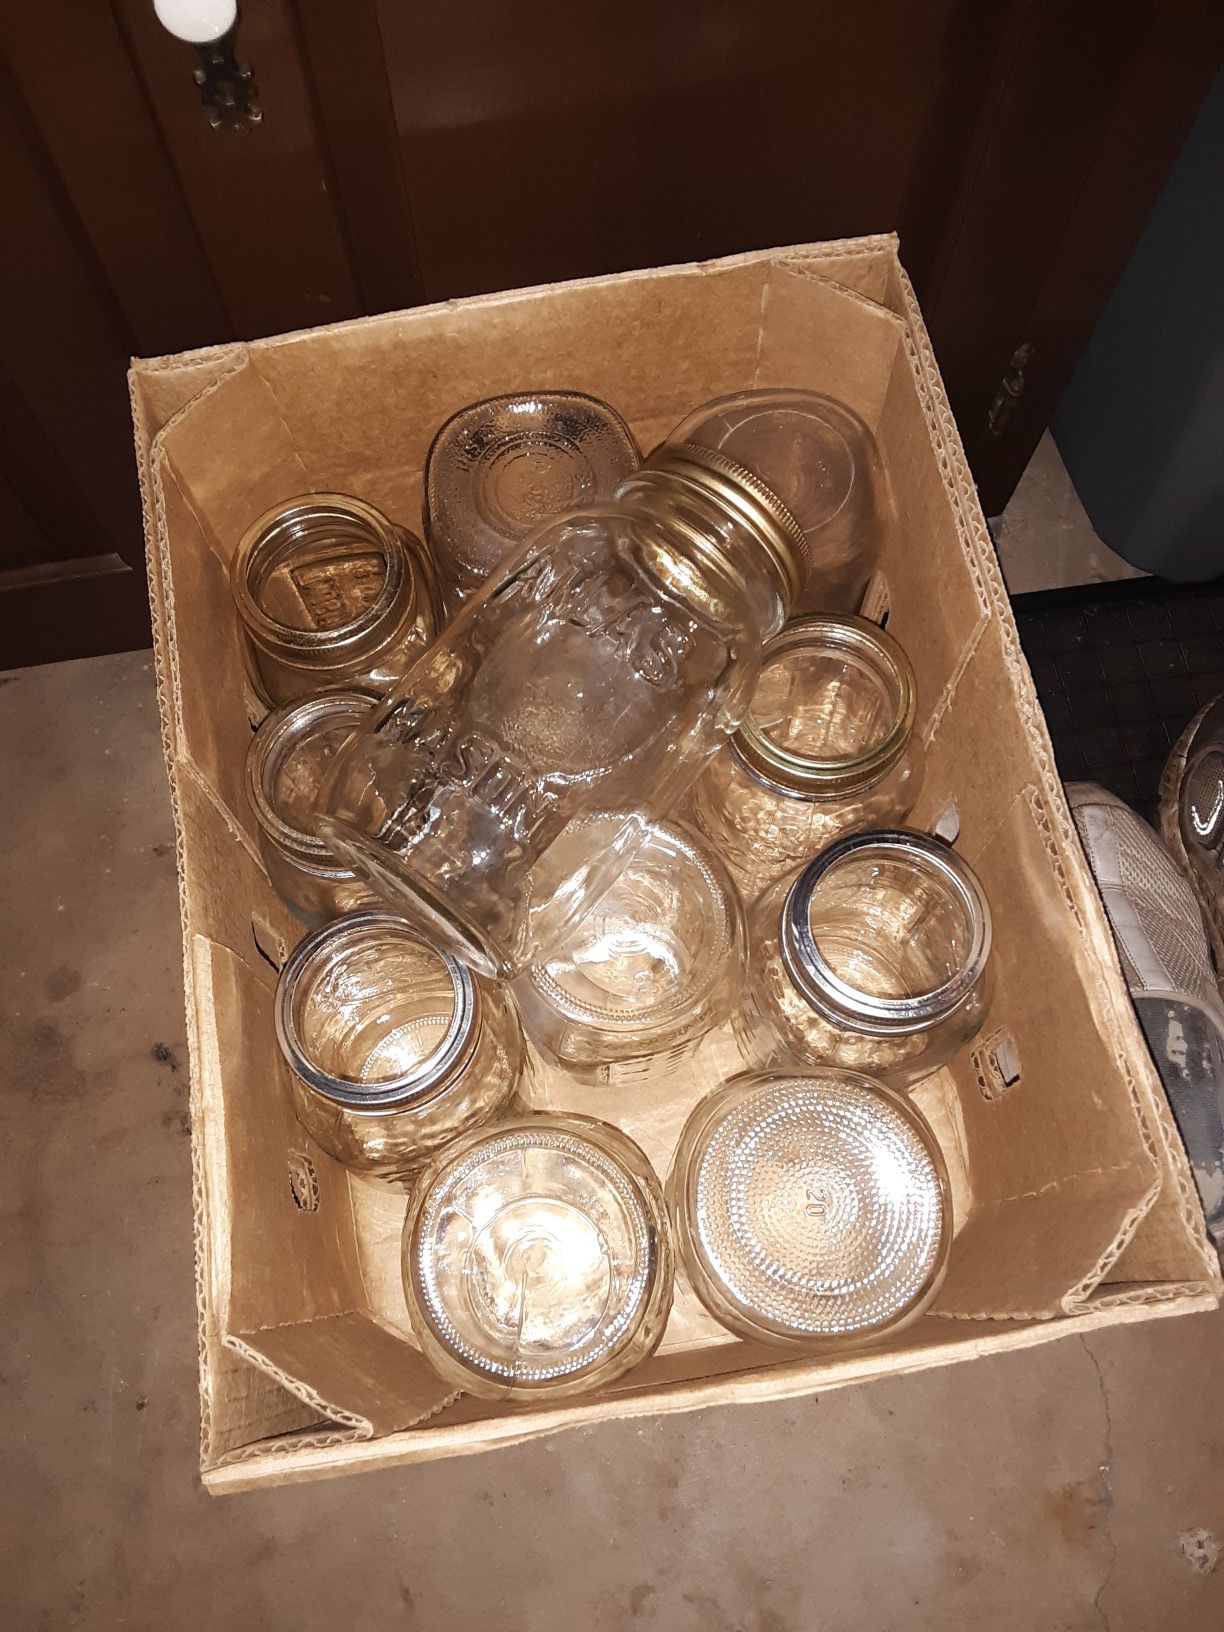 Regular mouth canning jars